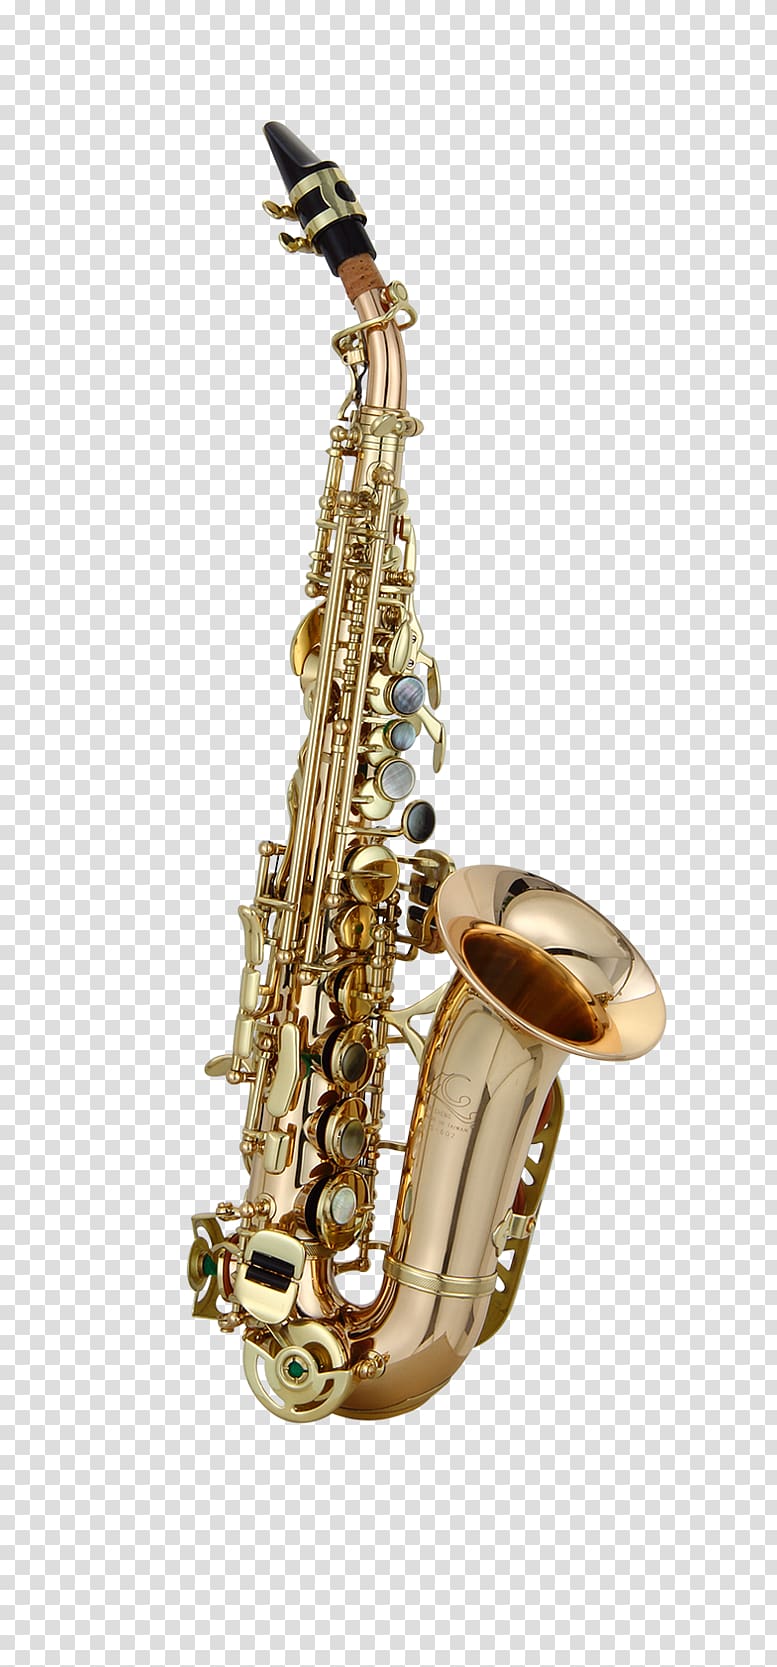 Baritone saxophone Chang Lien-cheng Saxophone Museum Clarinet family Soprano saxophone, Soprano Saxophone transparent background PNG clipart